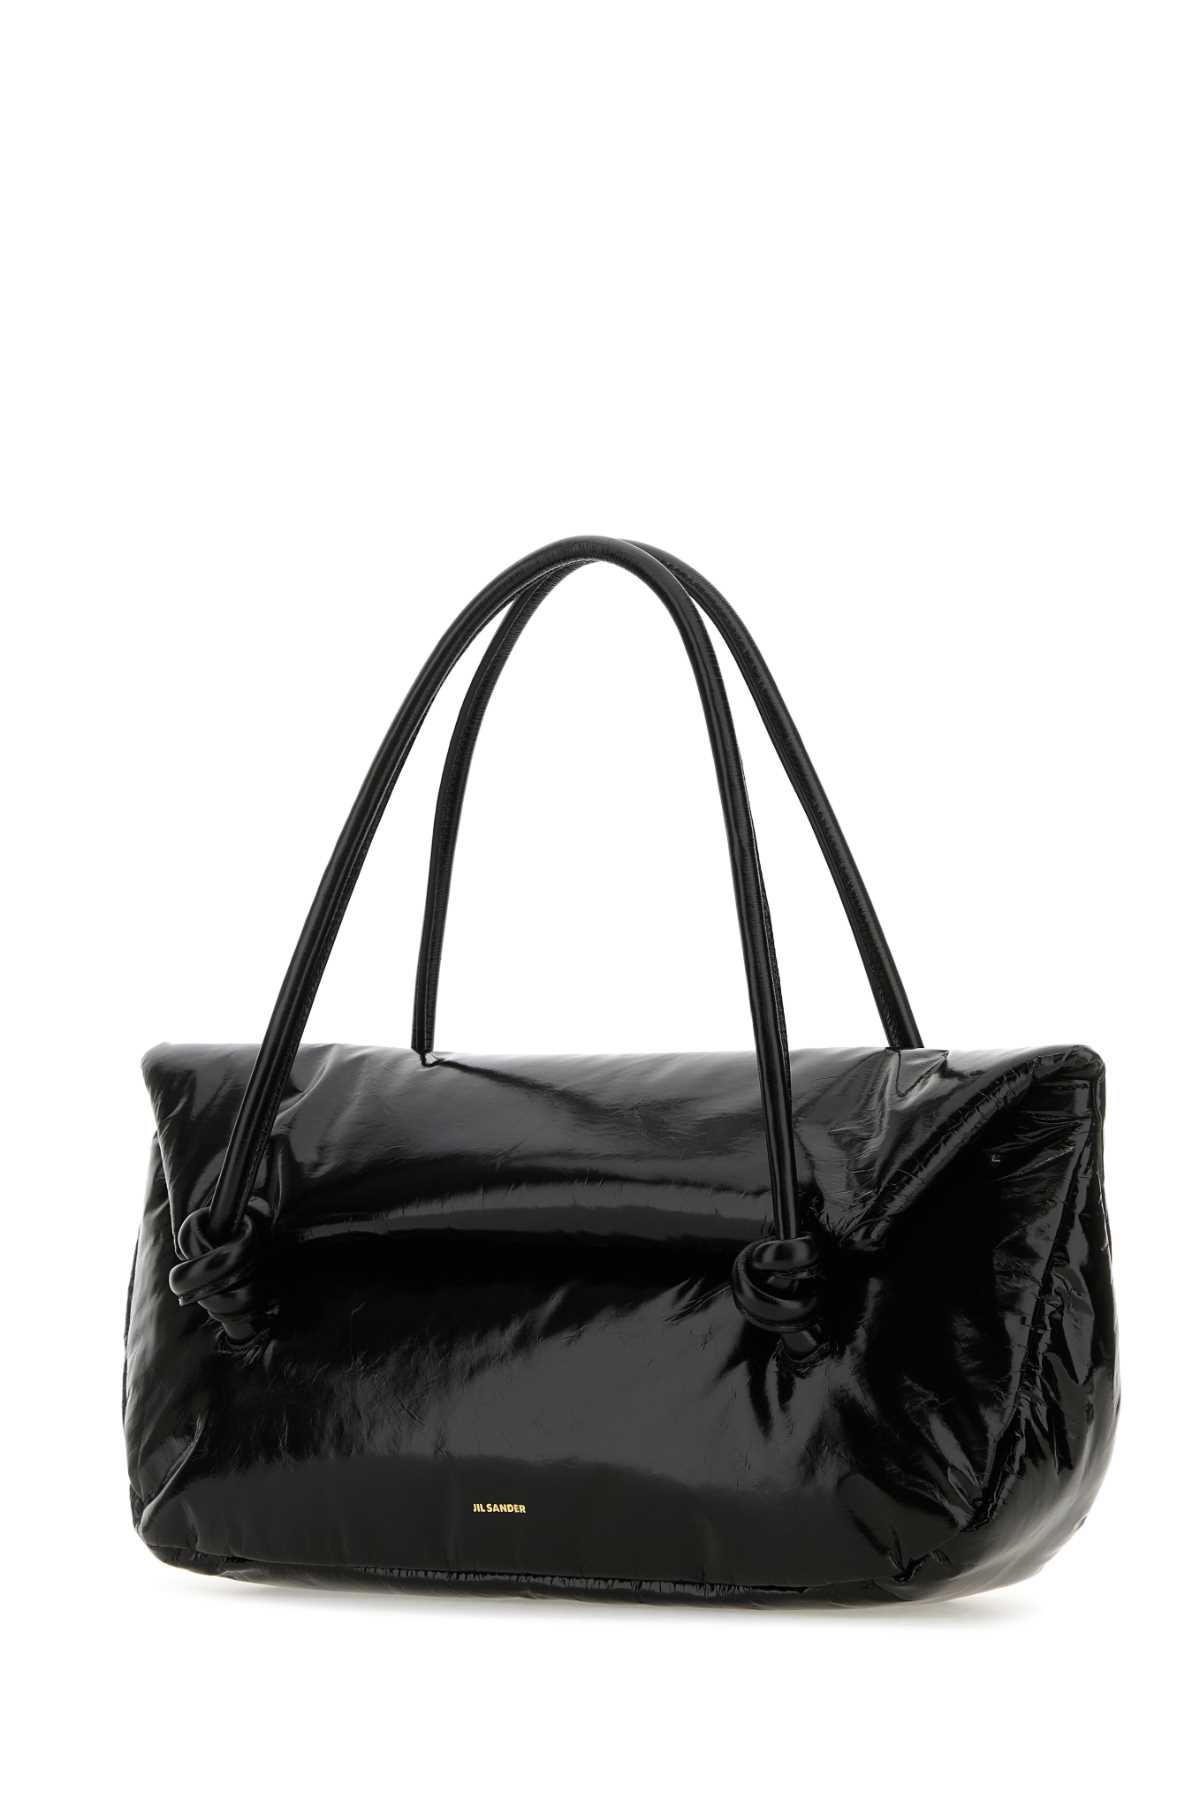 Jil Sander Black Leather Medium Knot Handle Handbag In 001